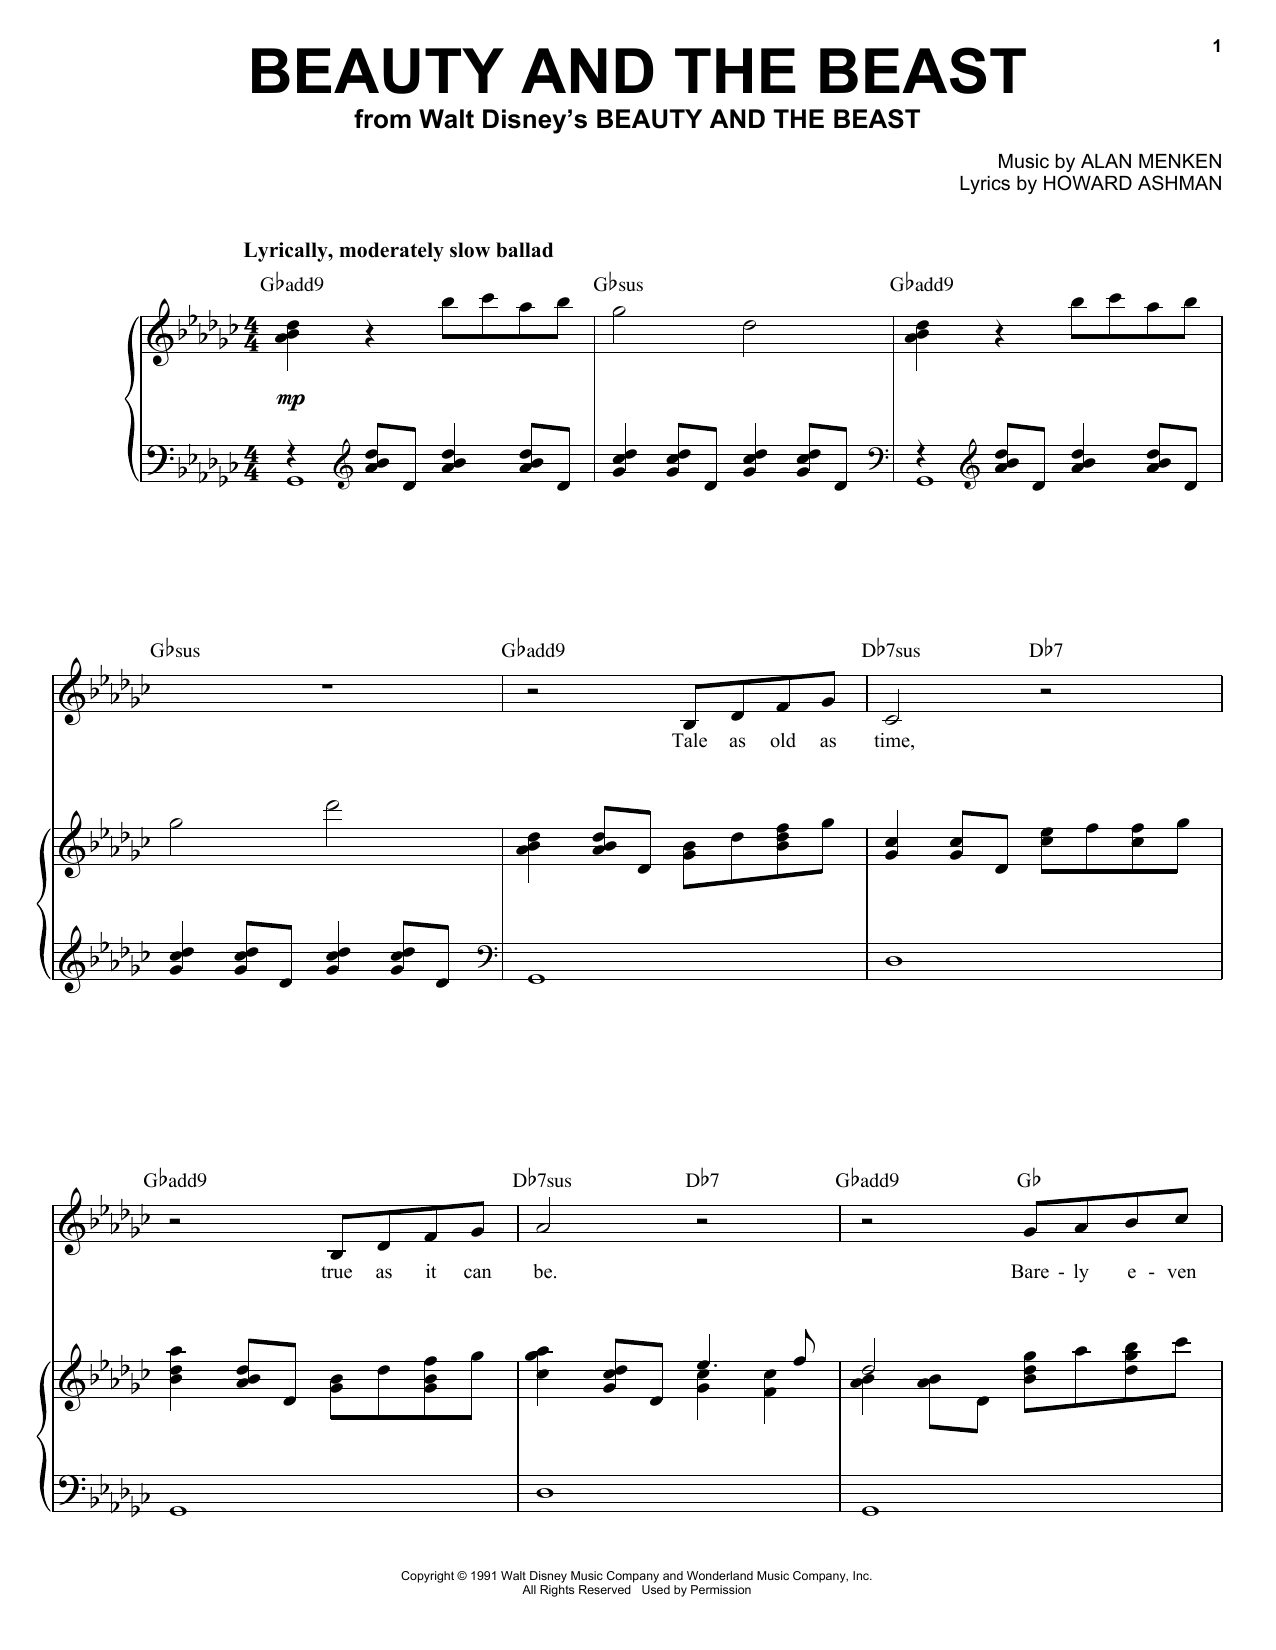 Alan Menken Howard Ashman Beauty And The Beast Sheet Music PDF Notes Chords Download 